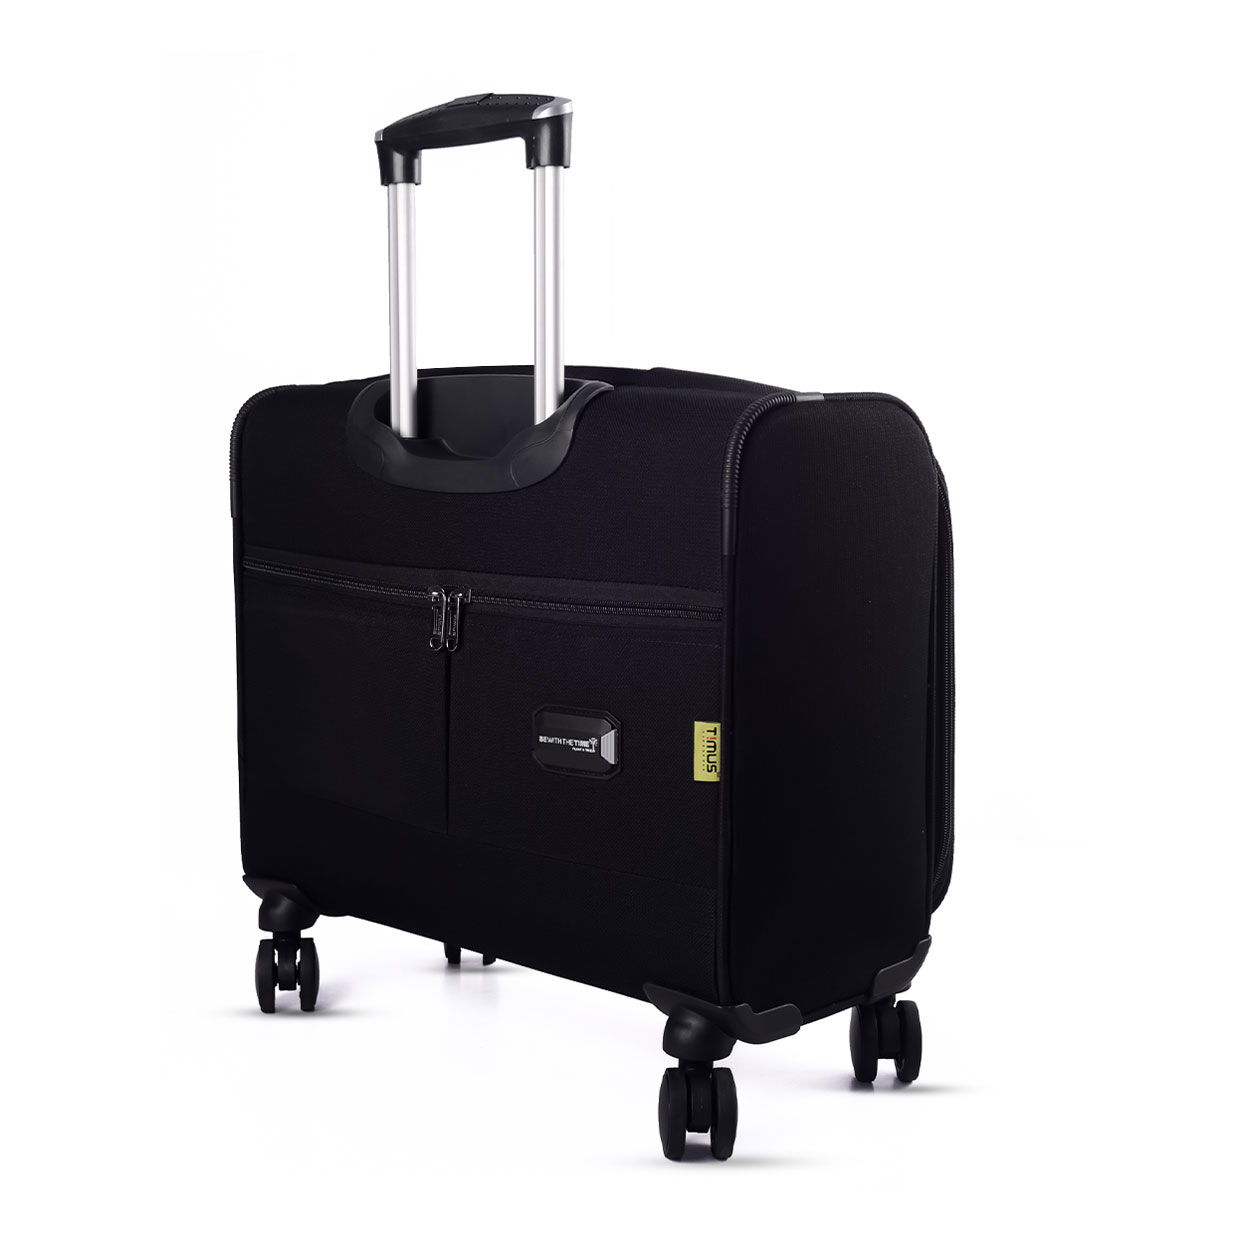 Timus-Lifestyle-Luggage-Soft-Luggage-Trolly-Bags-Atlanta-Pro-Black-3